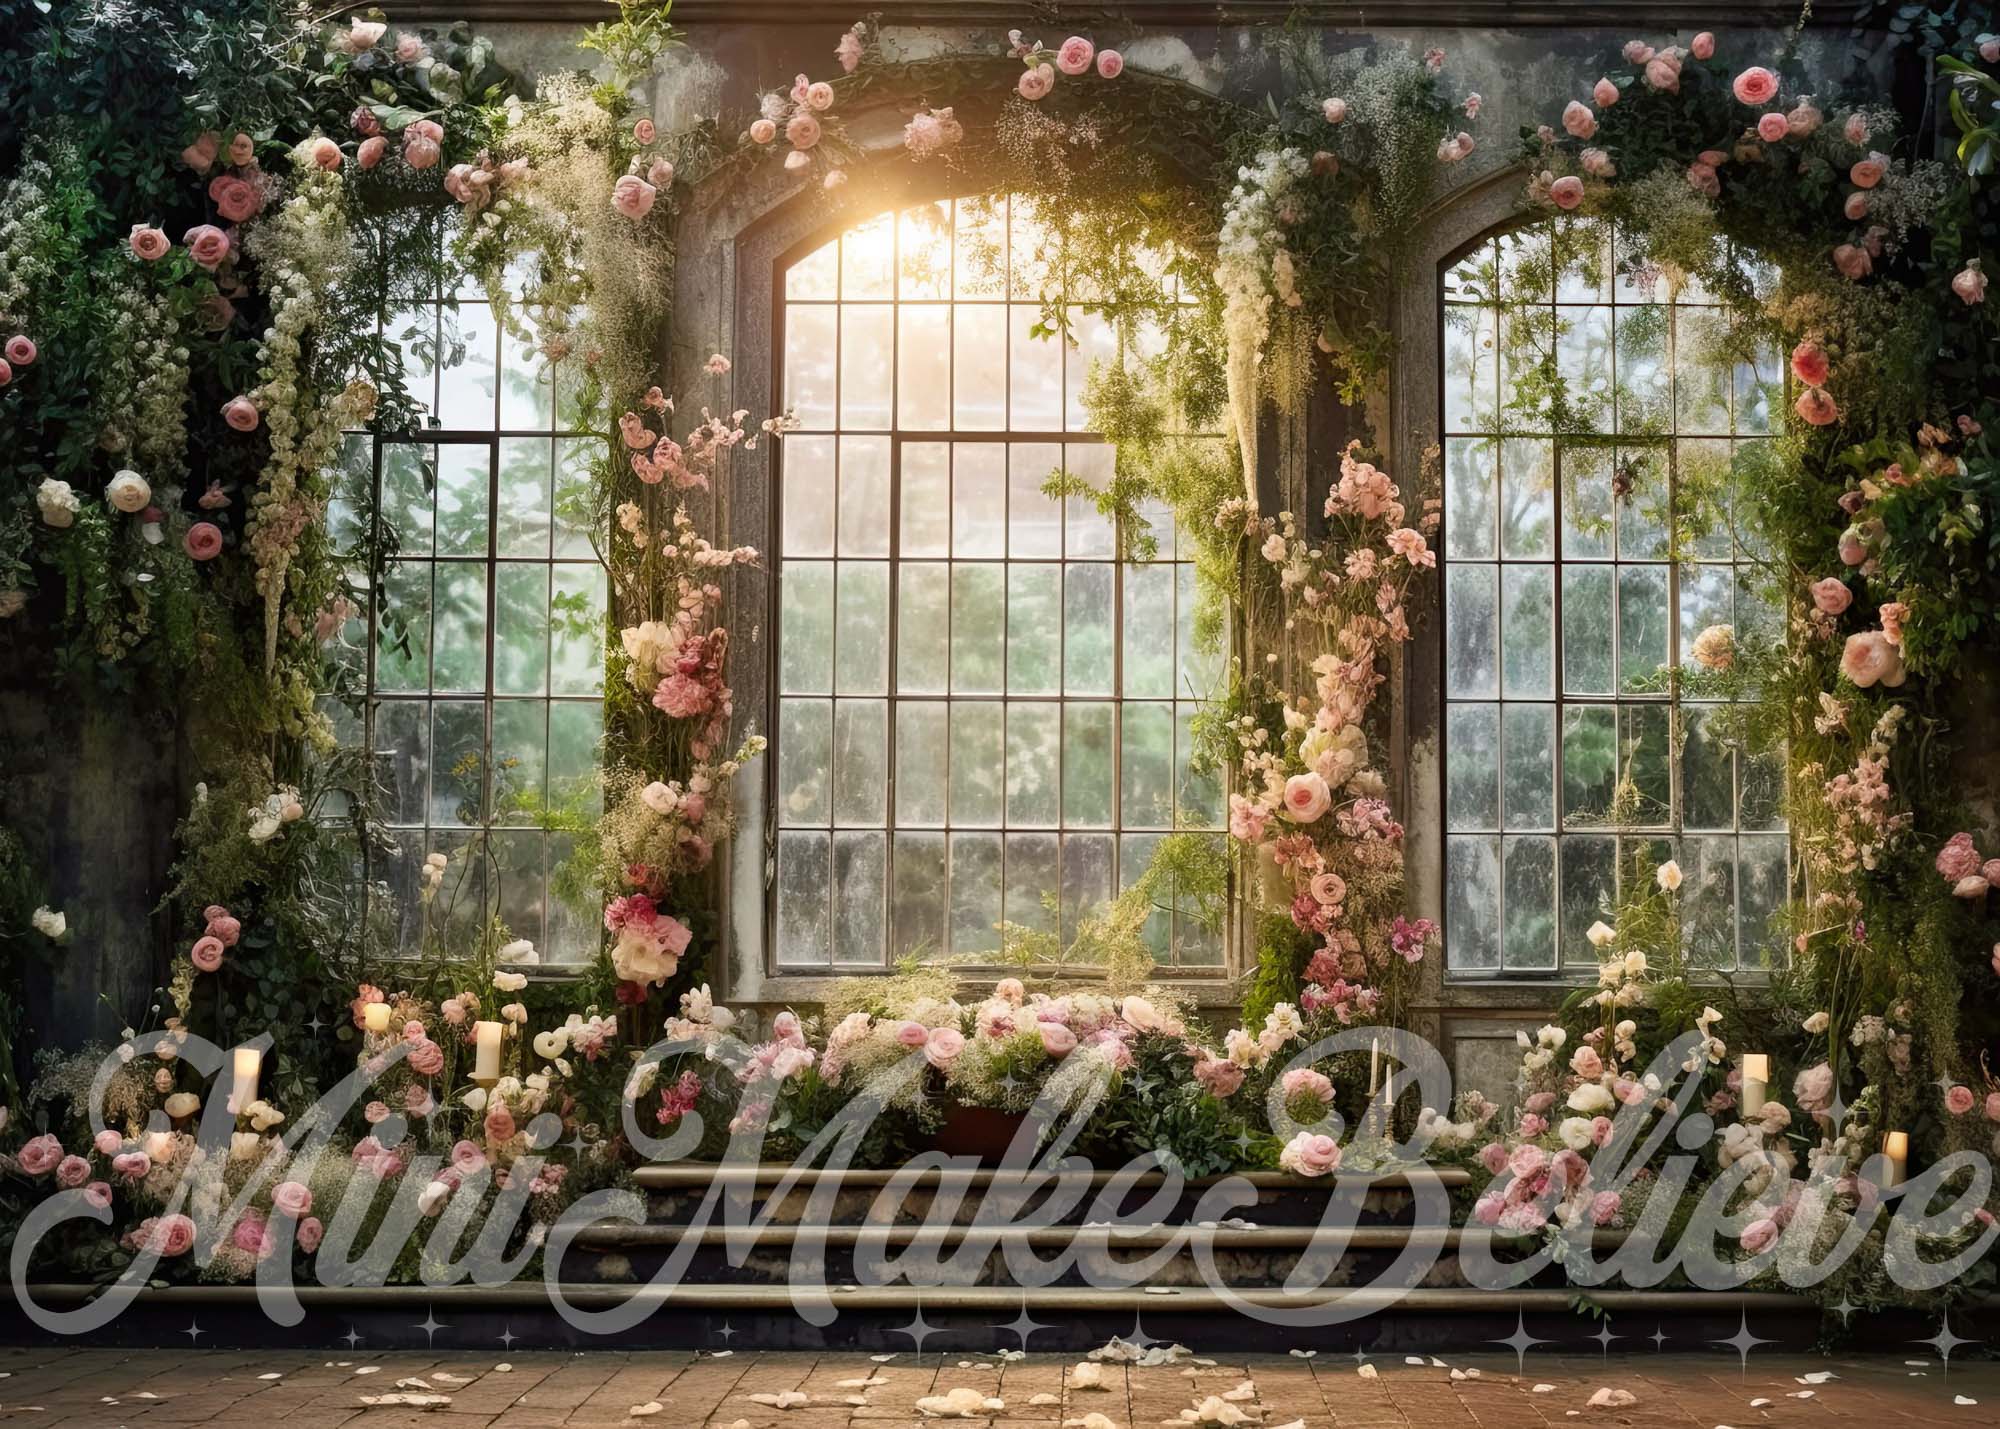 Kate Valentine Spring Wedding Backdrop Romantic Roses Designed by Mini MakeBelieve